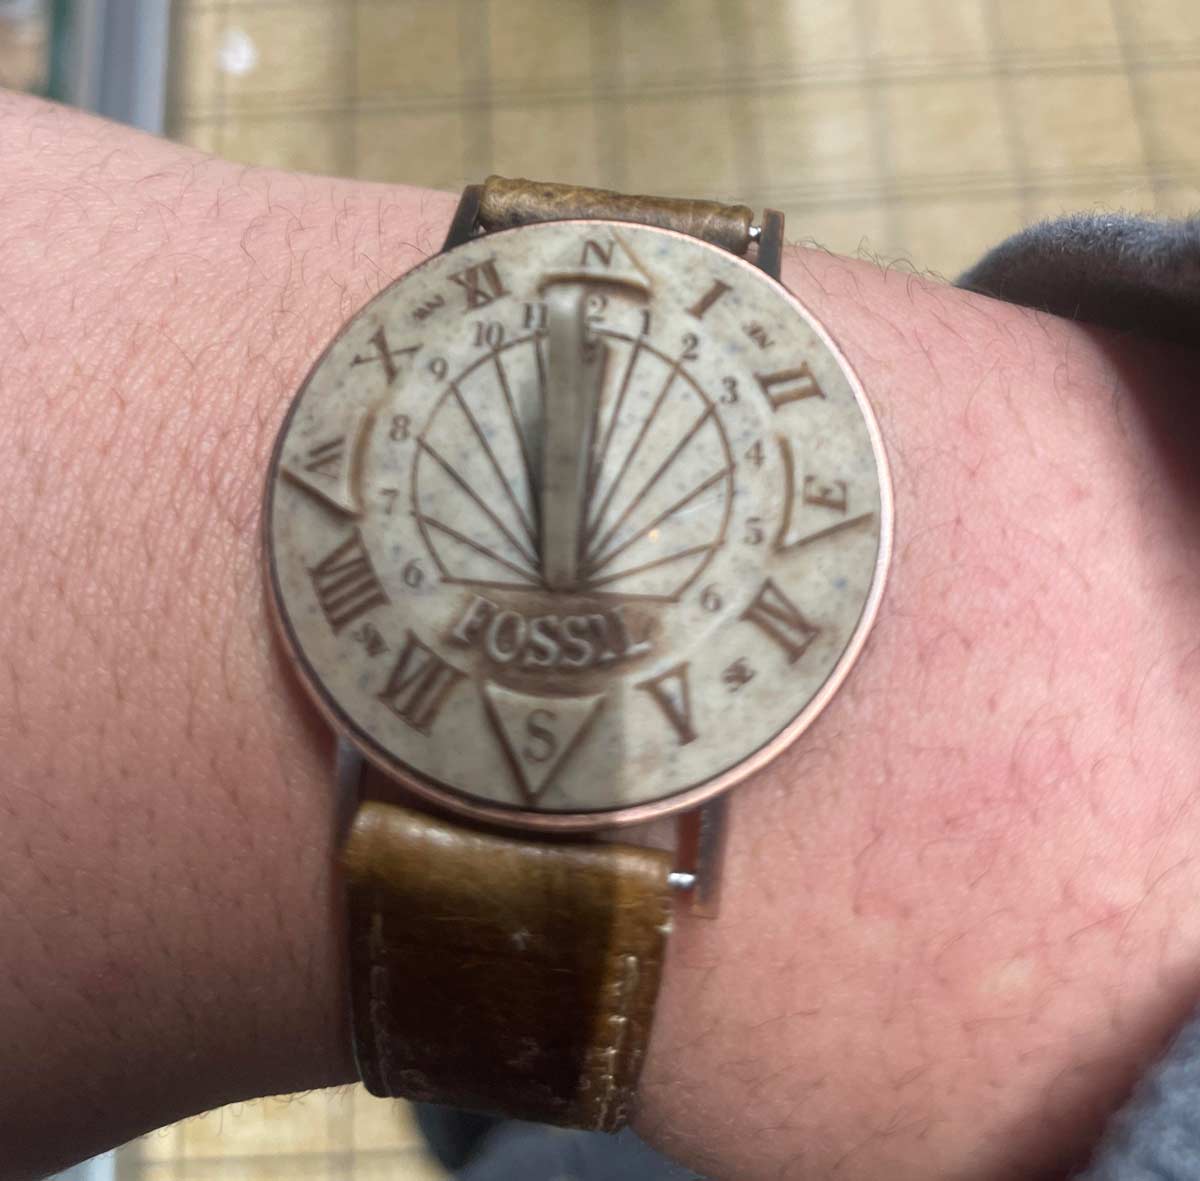 Sundial watch I got from the flea market